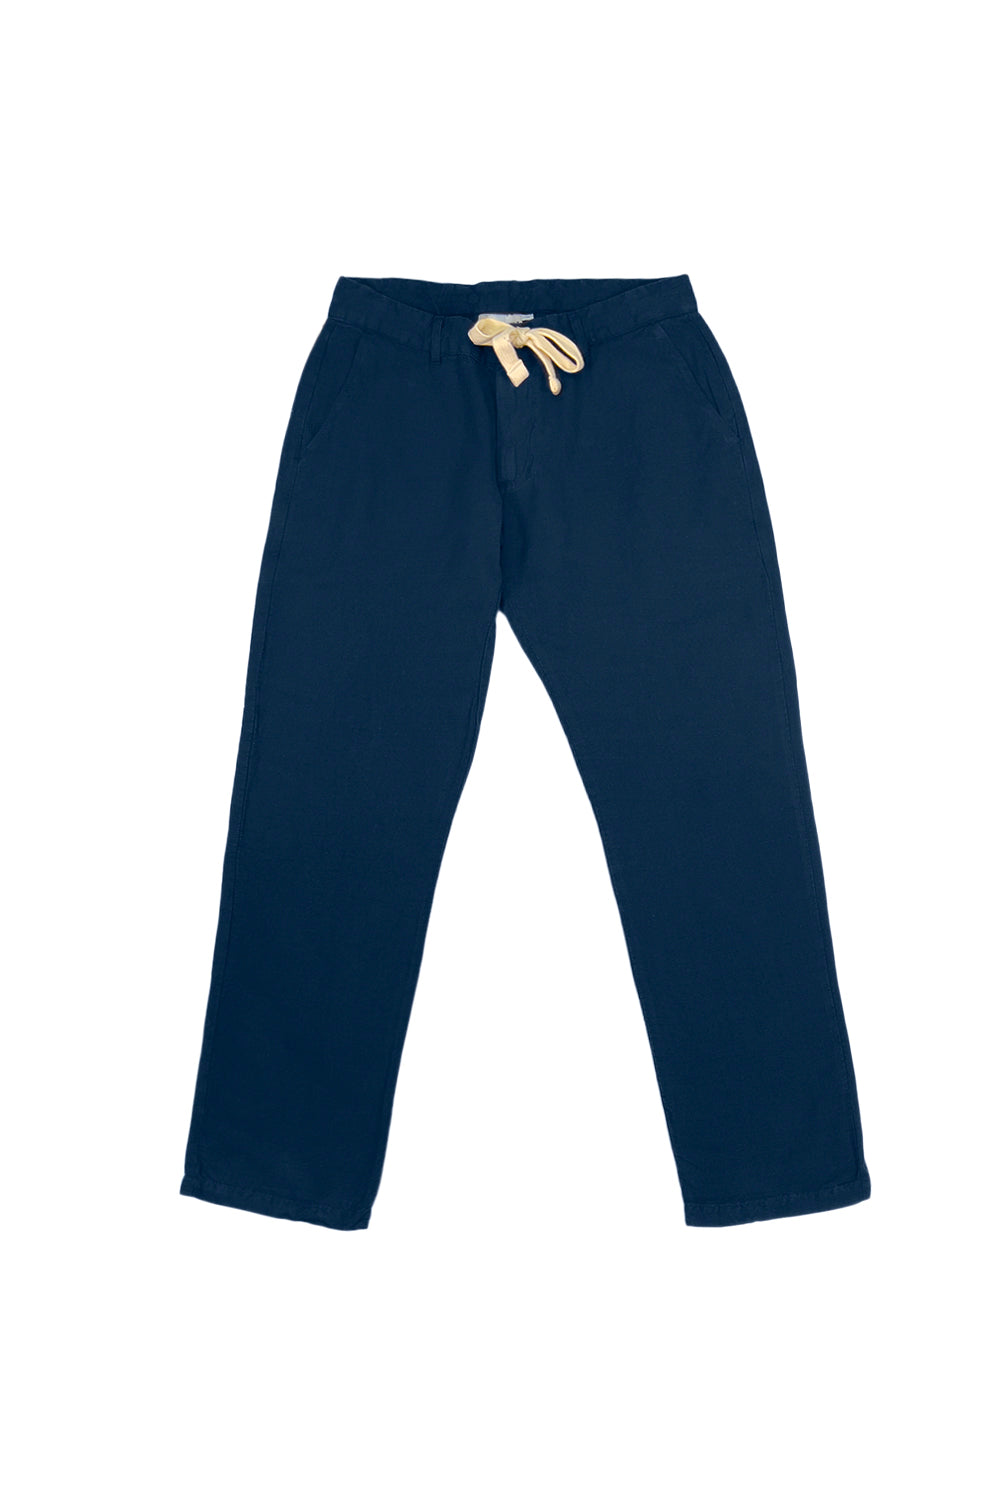 Traverse Pant | Jungmaven Hemp Clothing & Accessories / Color: Navy